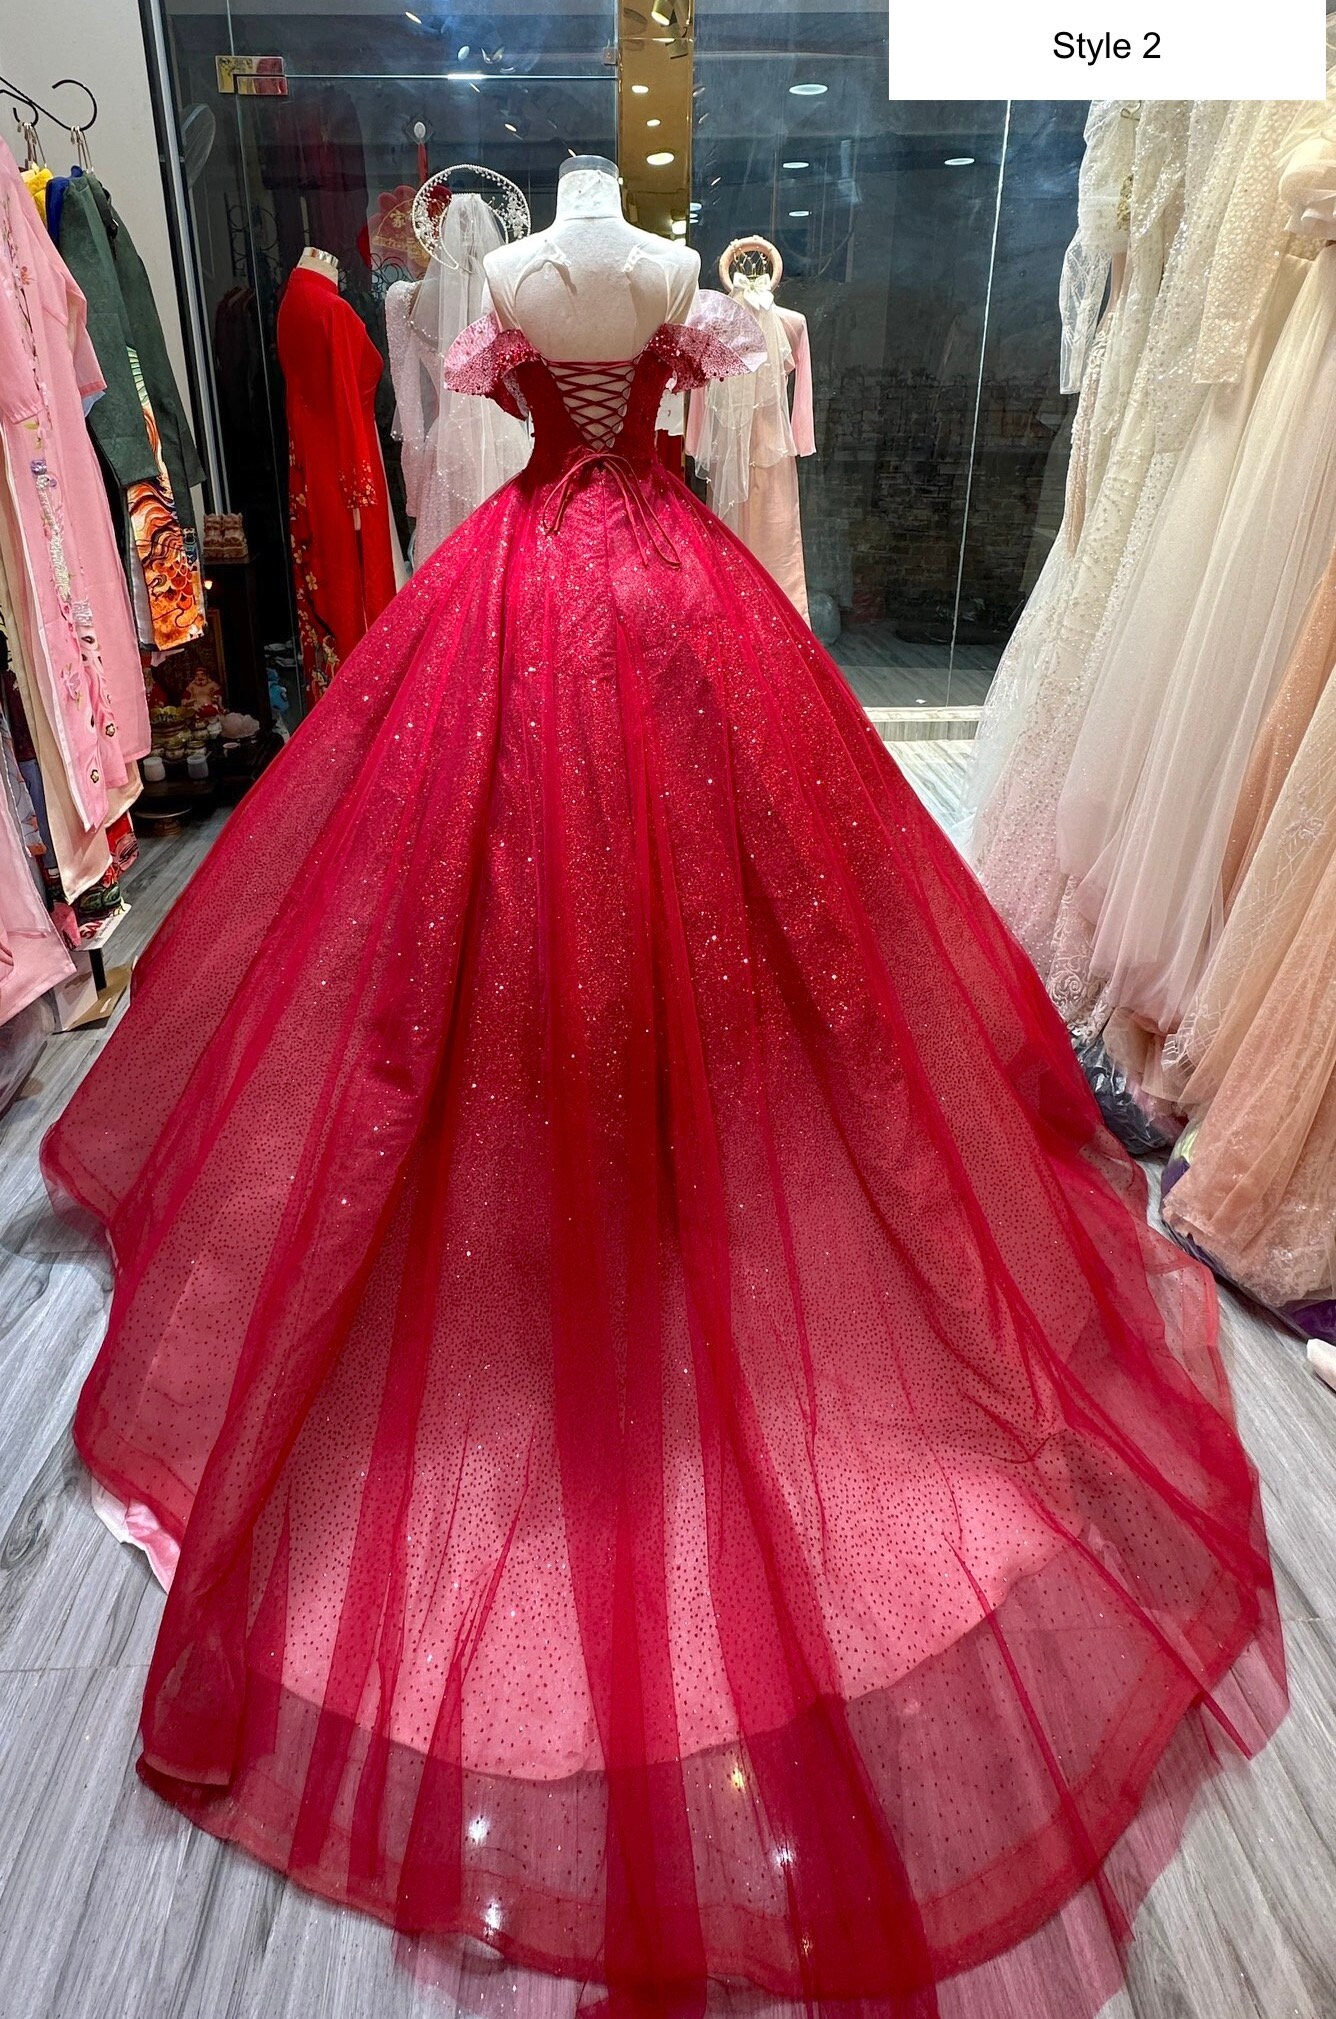 Red Wedding Dress For Sale 3/4 Sleeve A Line Formal Dress Train